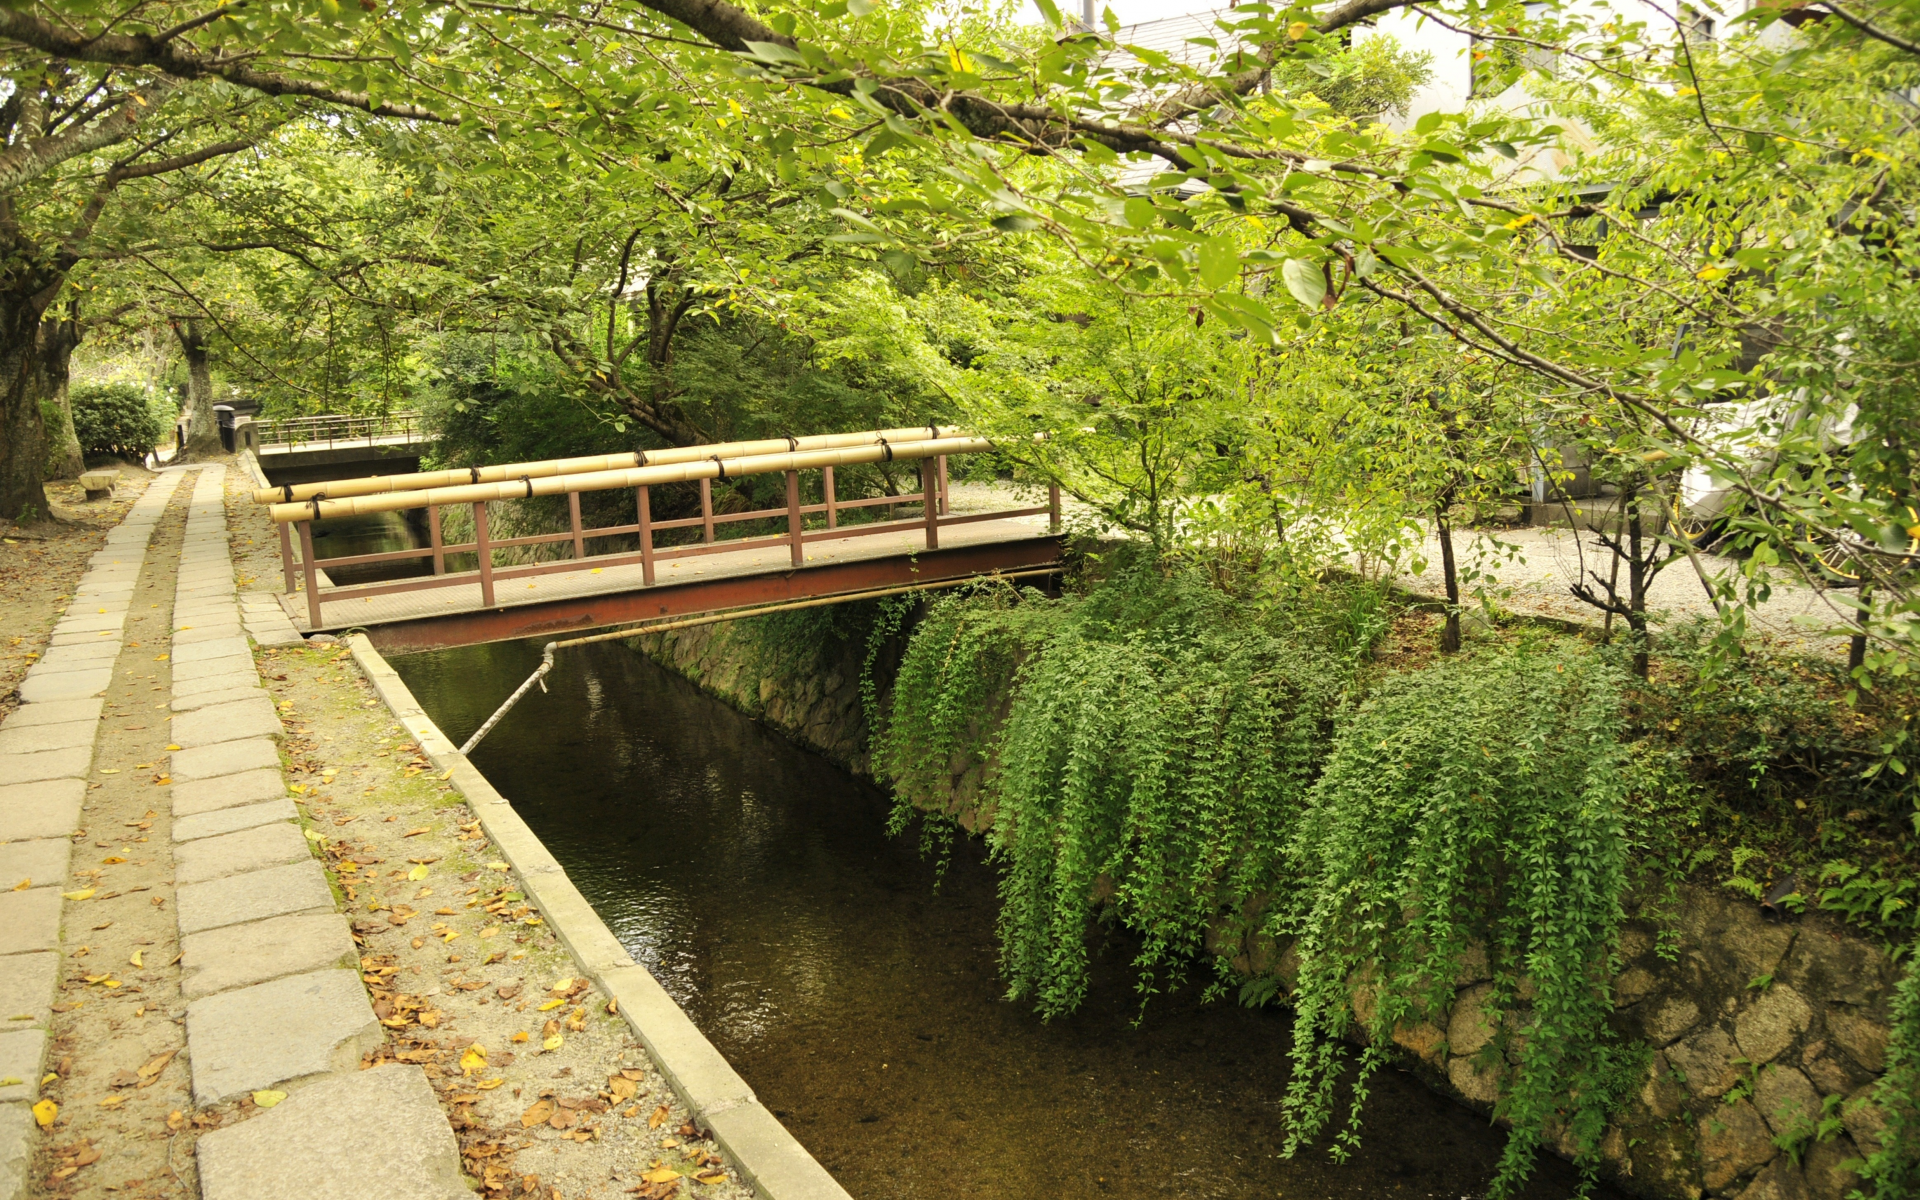 деревья, киото, восток, мост, япония